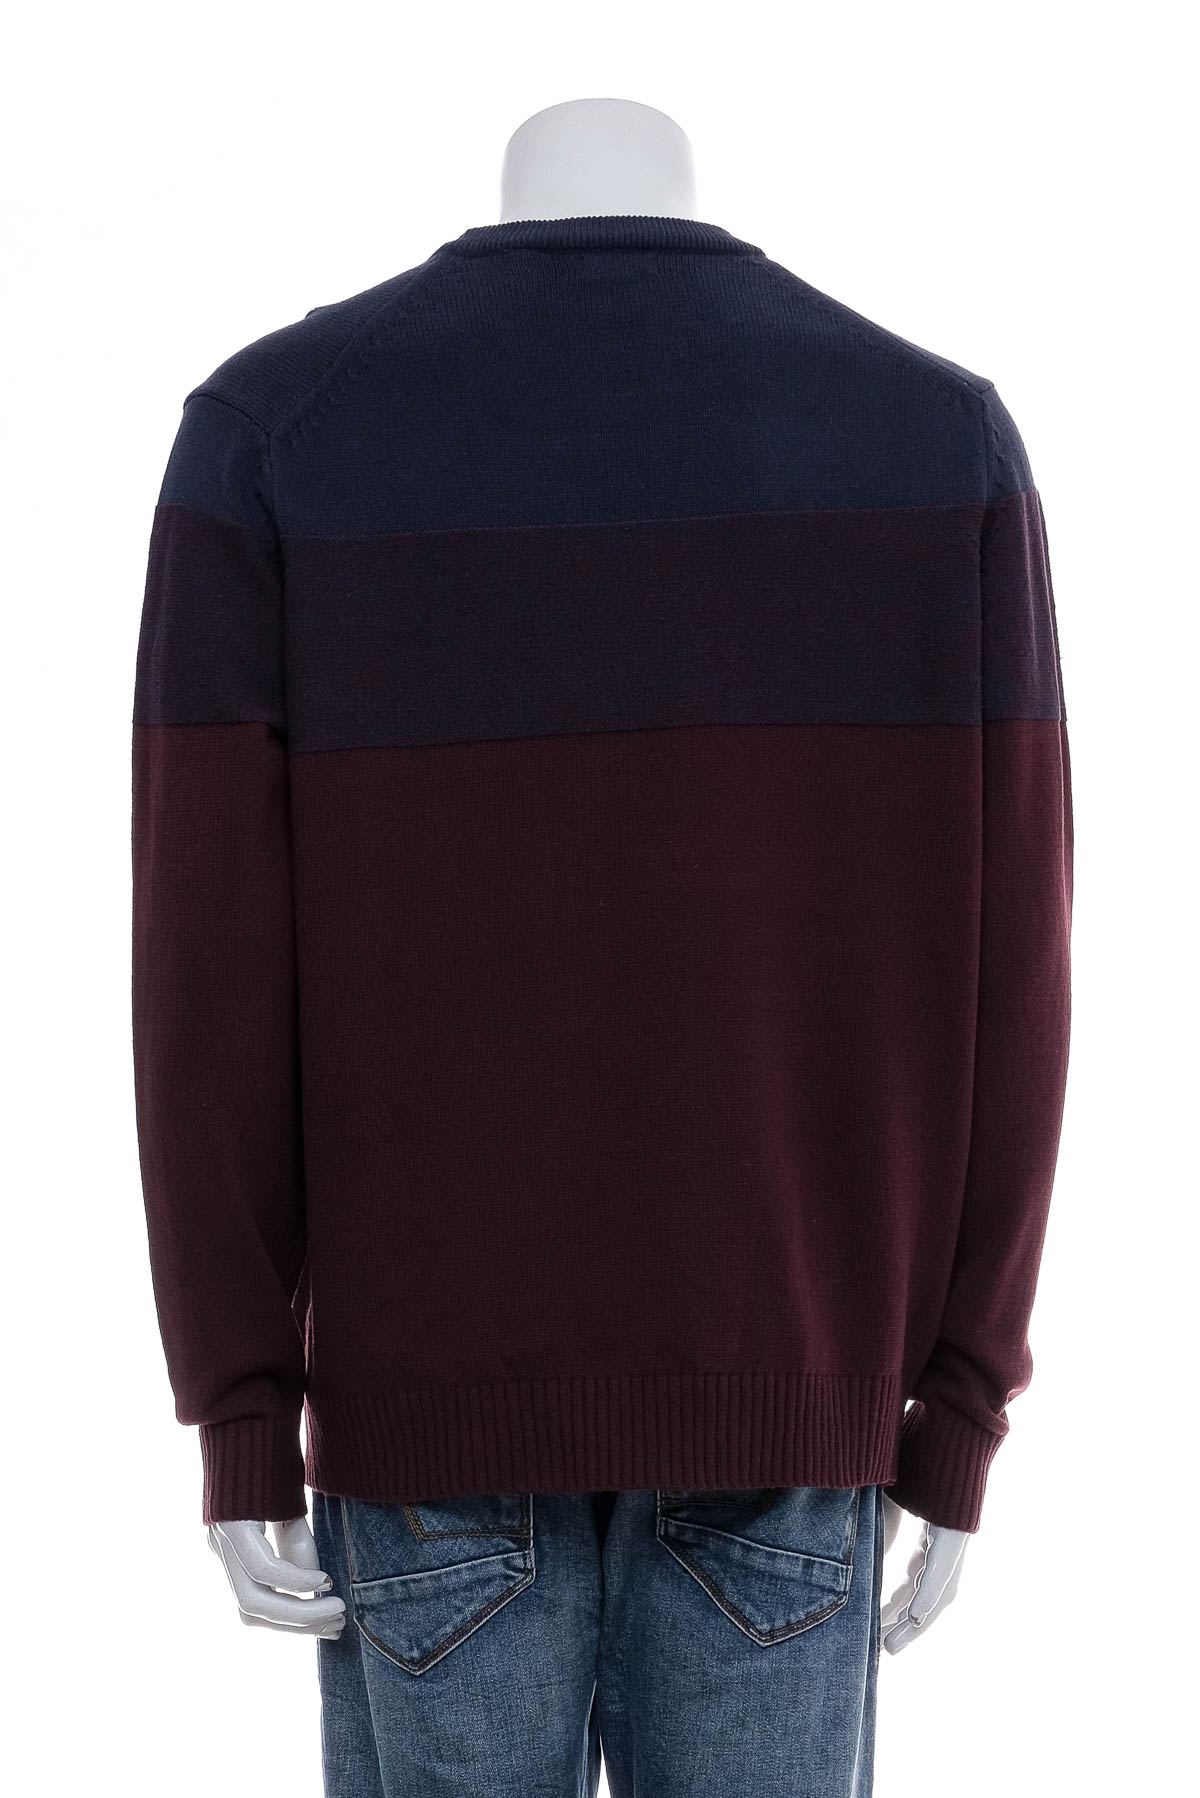 Men's sweater - Izod - 1